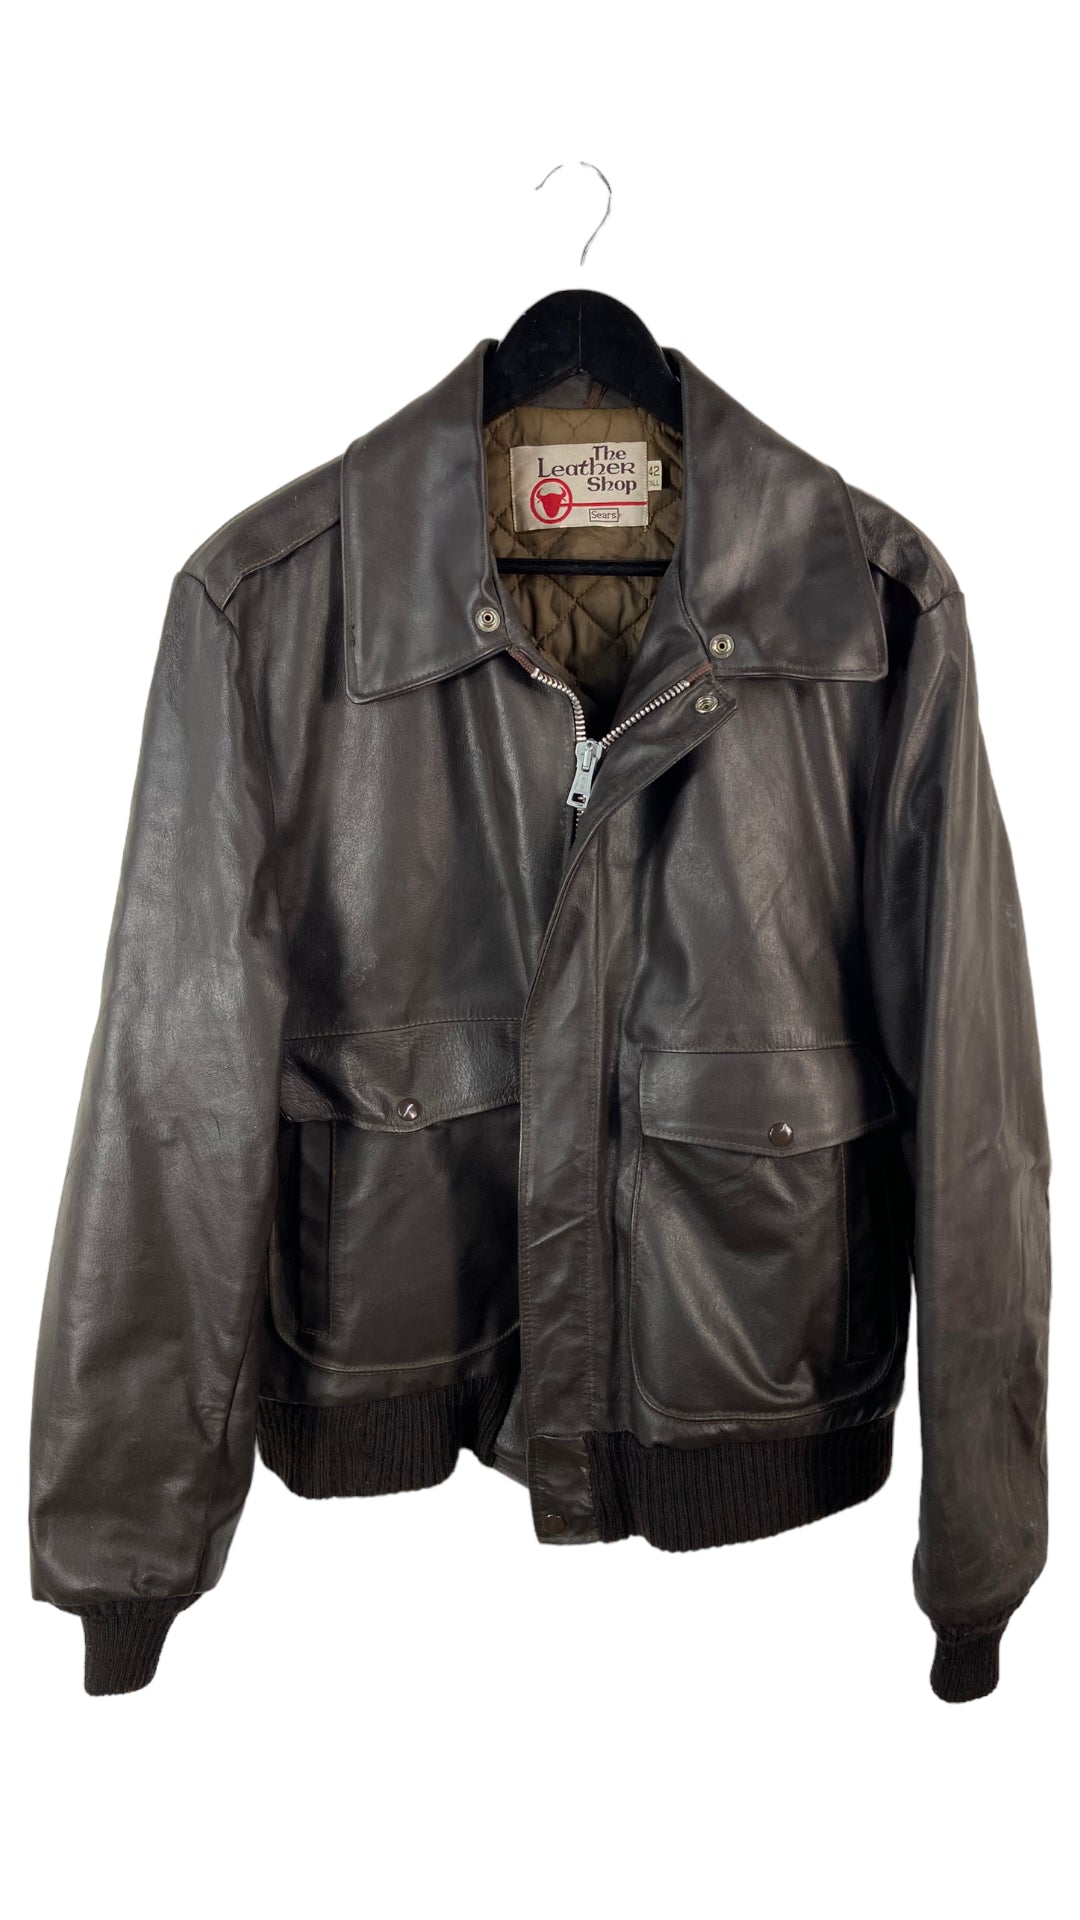 VTG Sears Brown Leather Zip Jacket Sz M/L